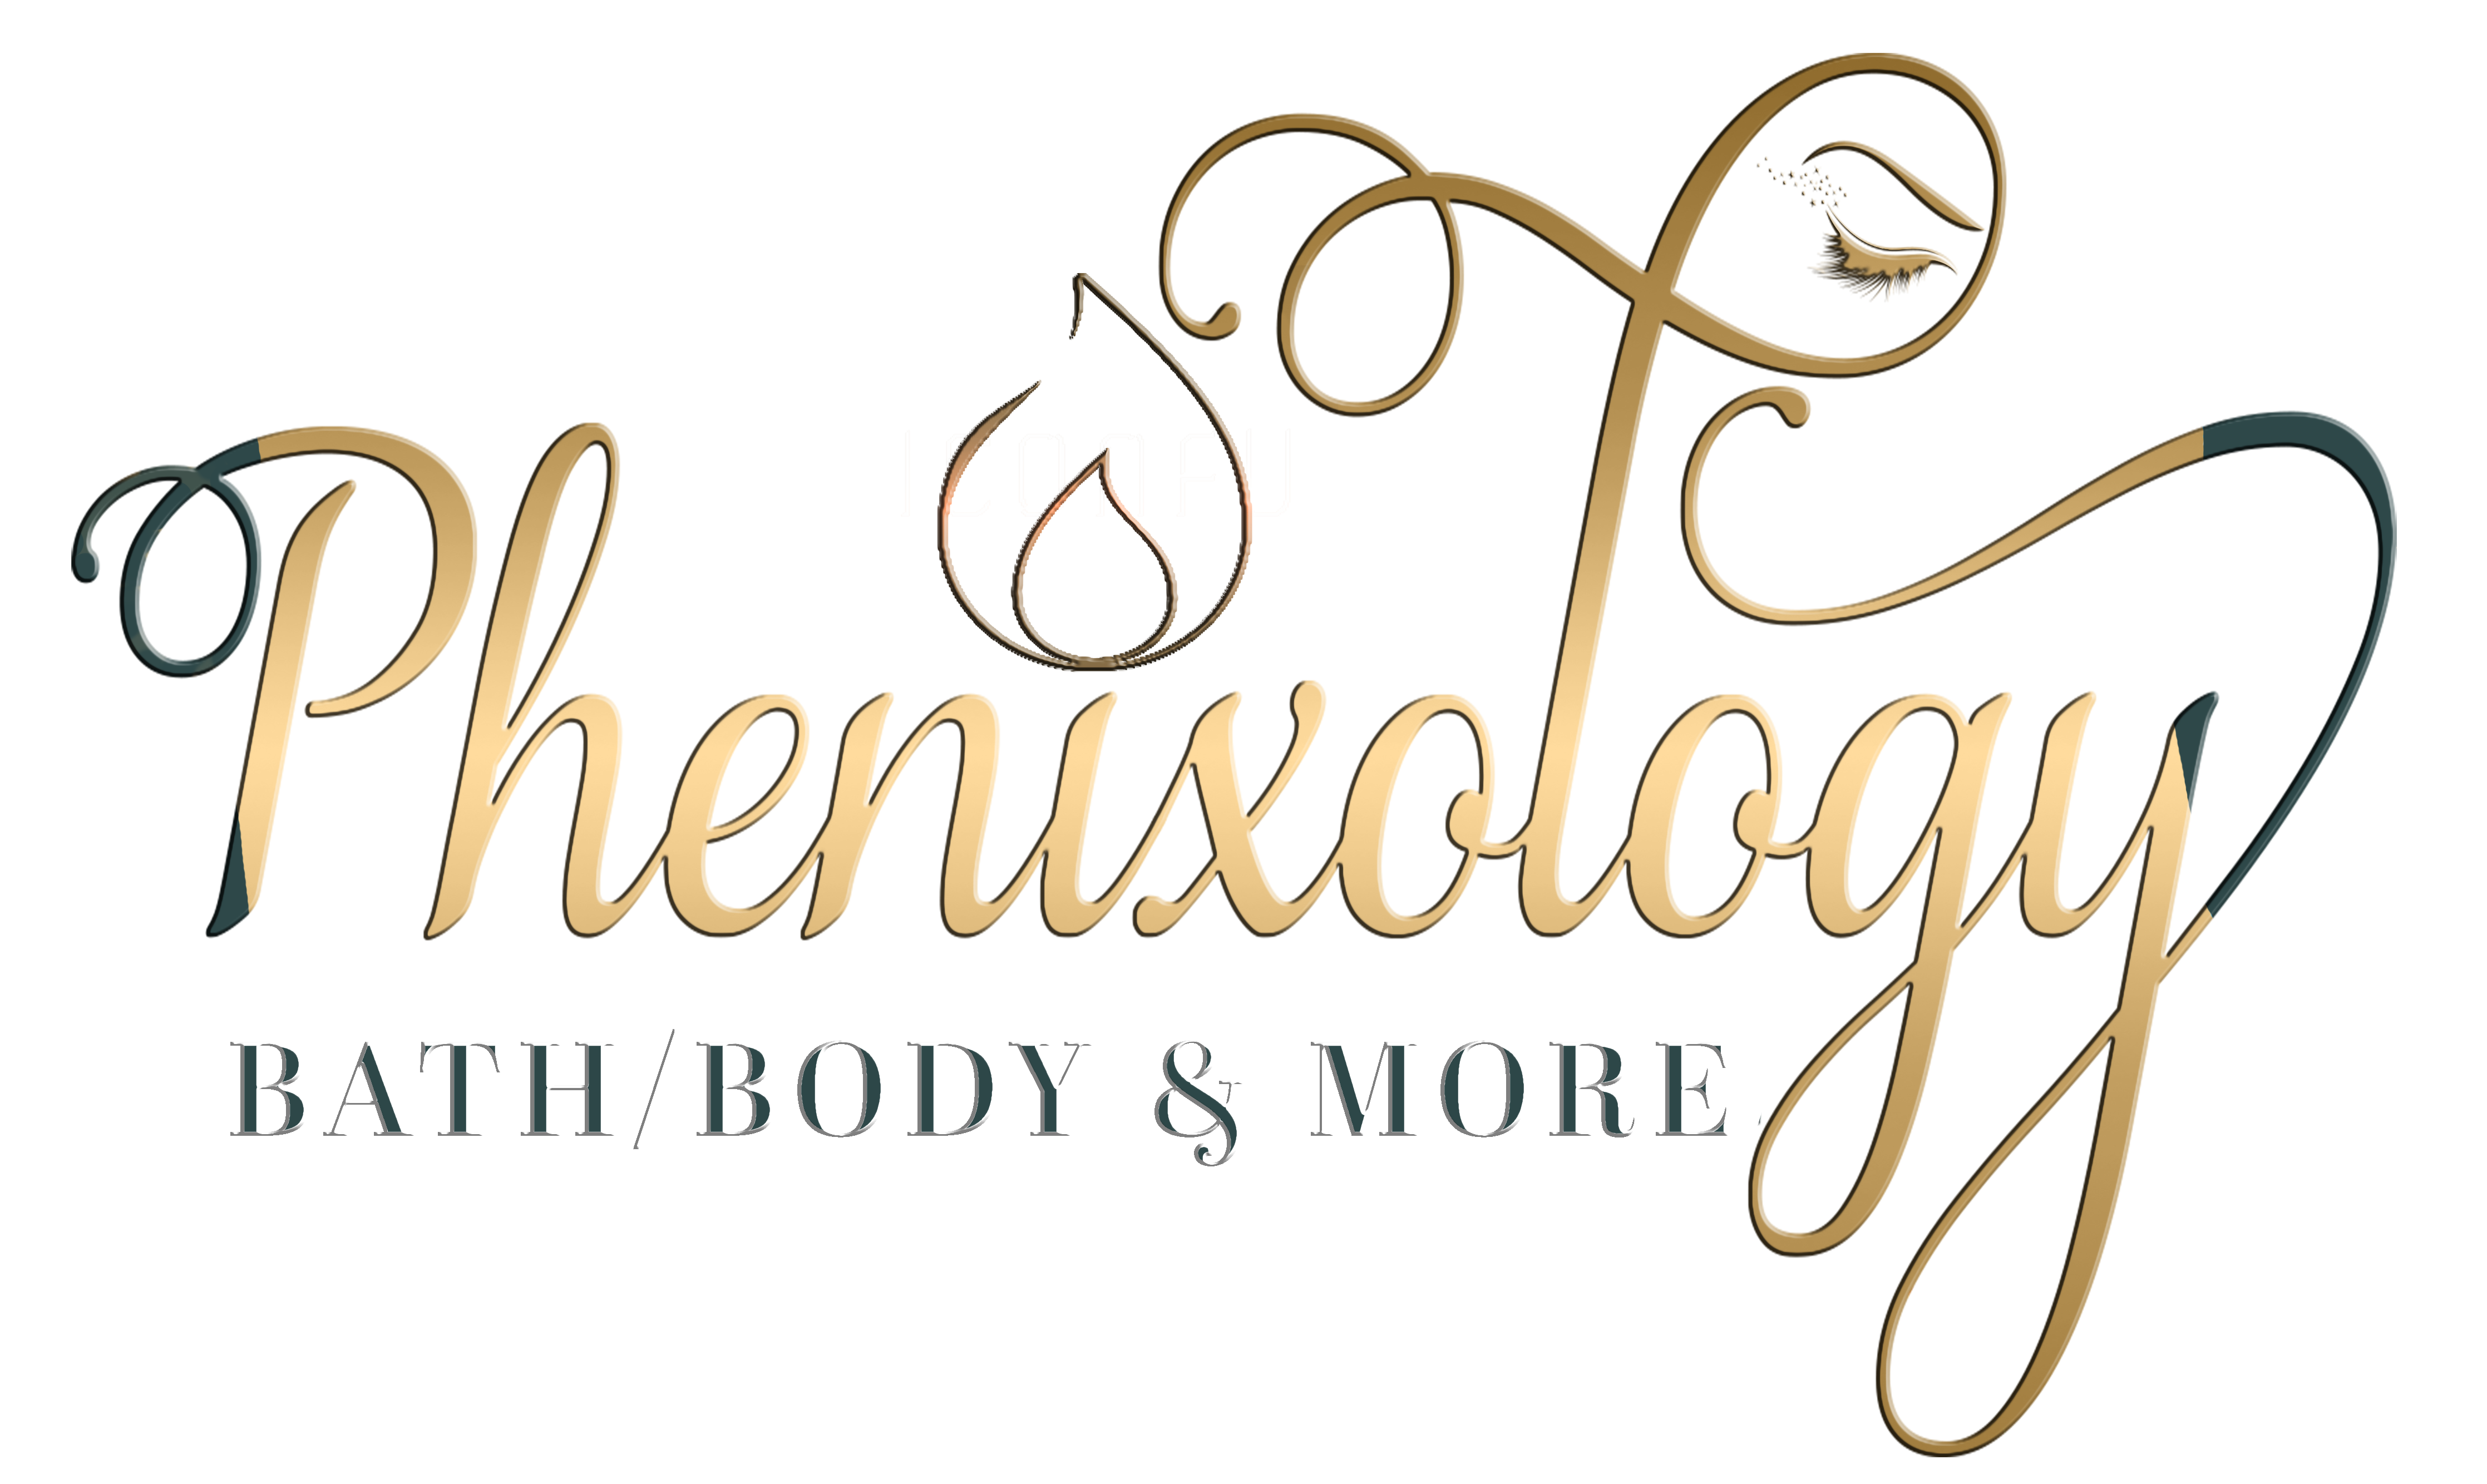 Phenixology